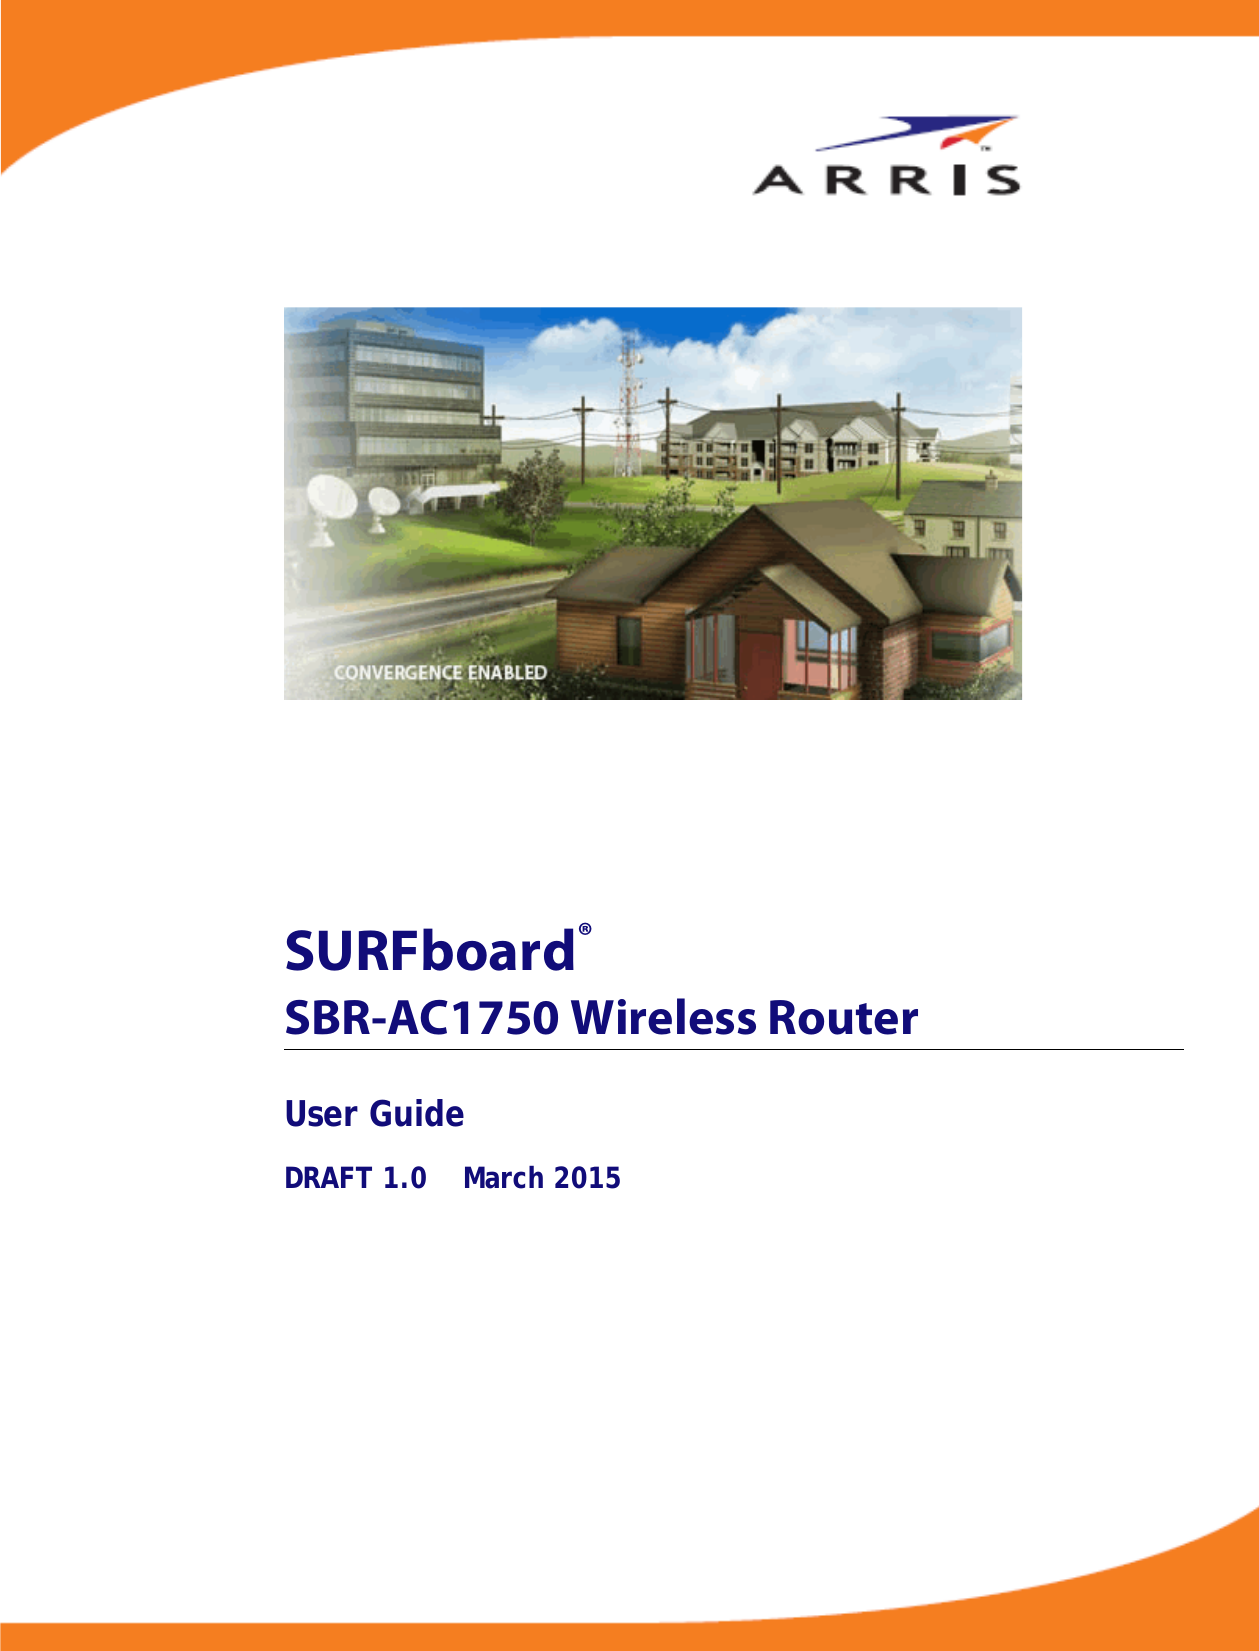     SURFboard® SBR-AC1750 Wireless Router User Guide DRAFT 1.0    March 2015  